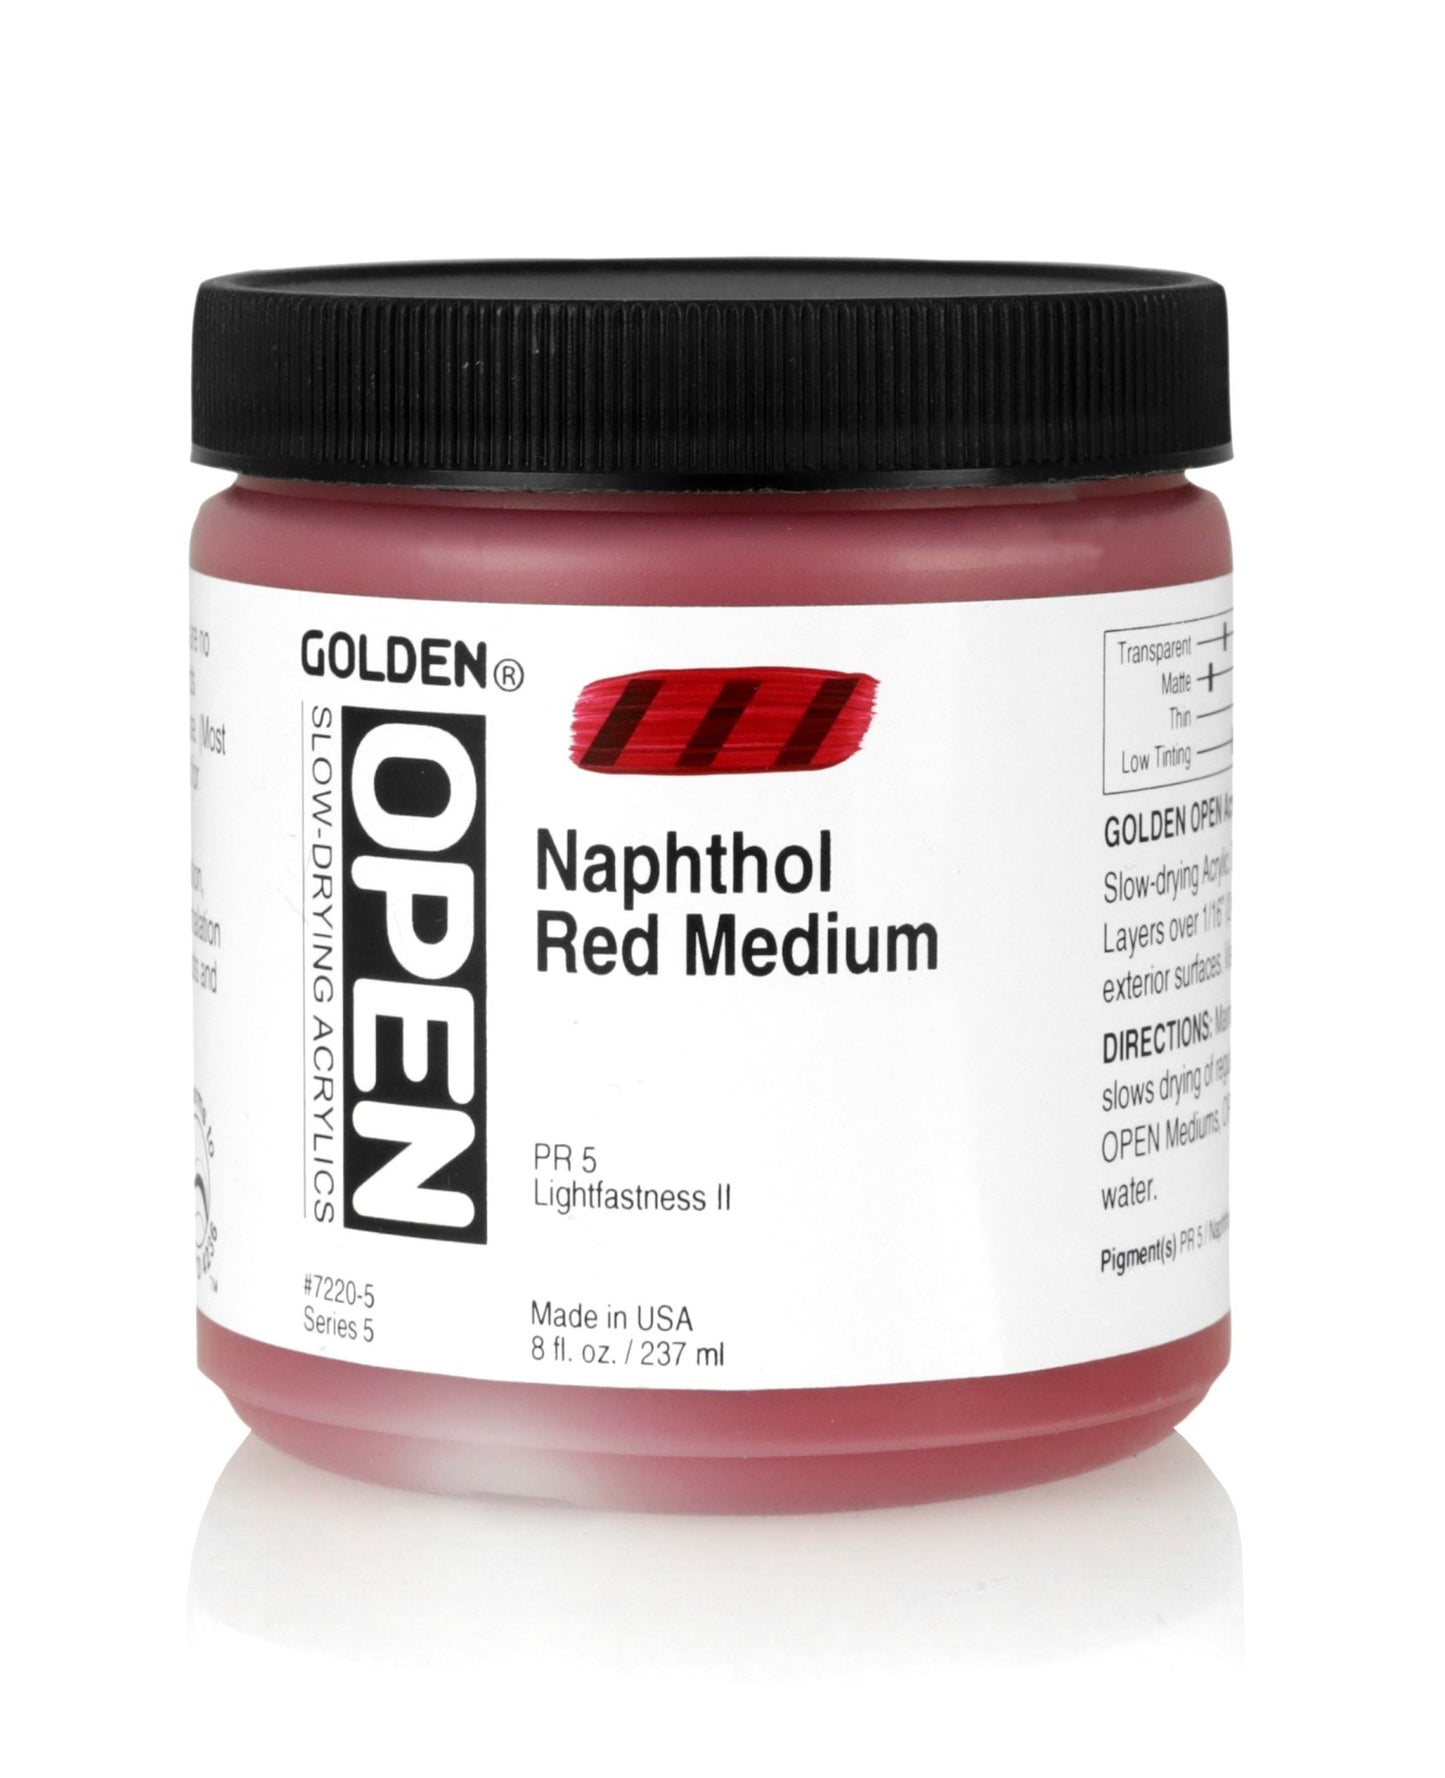 Golden Open Acrylics 237ml Naphthol Red Medium - theartshop.com.au